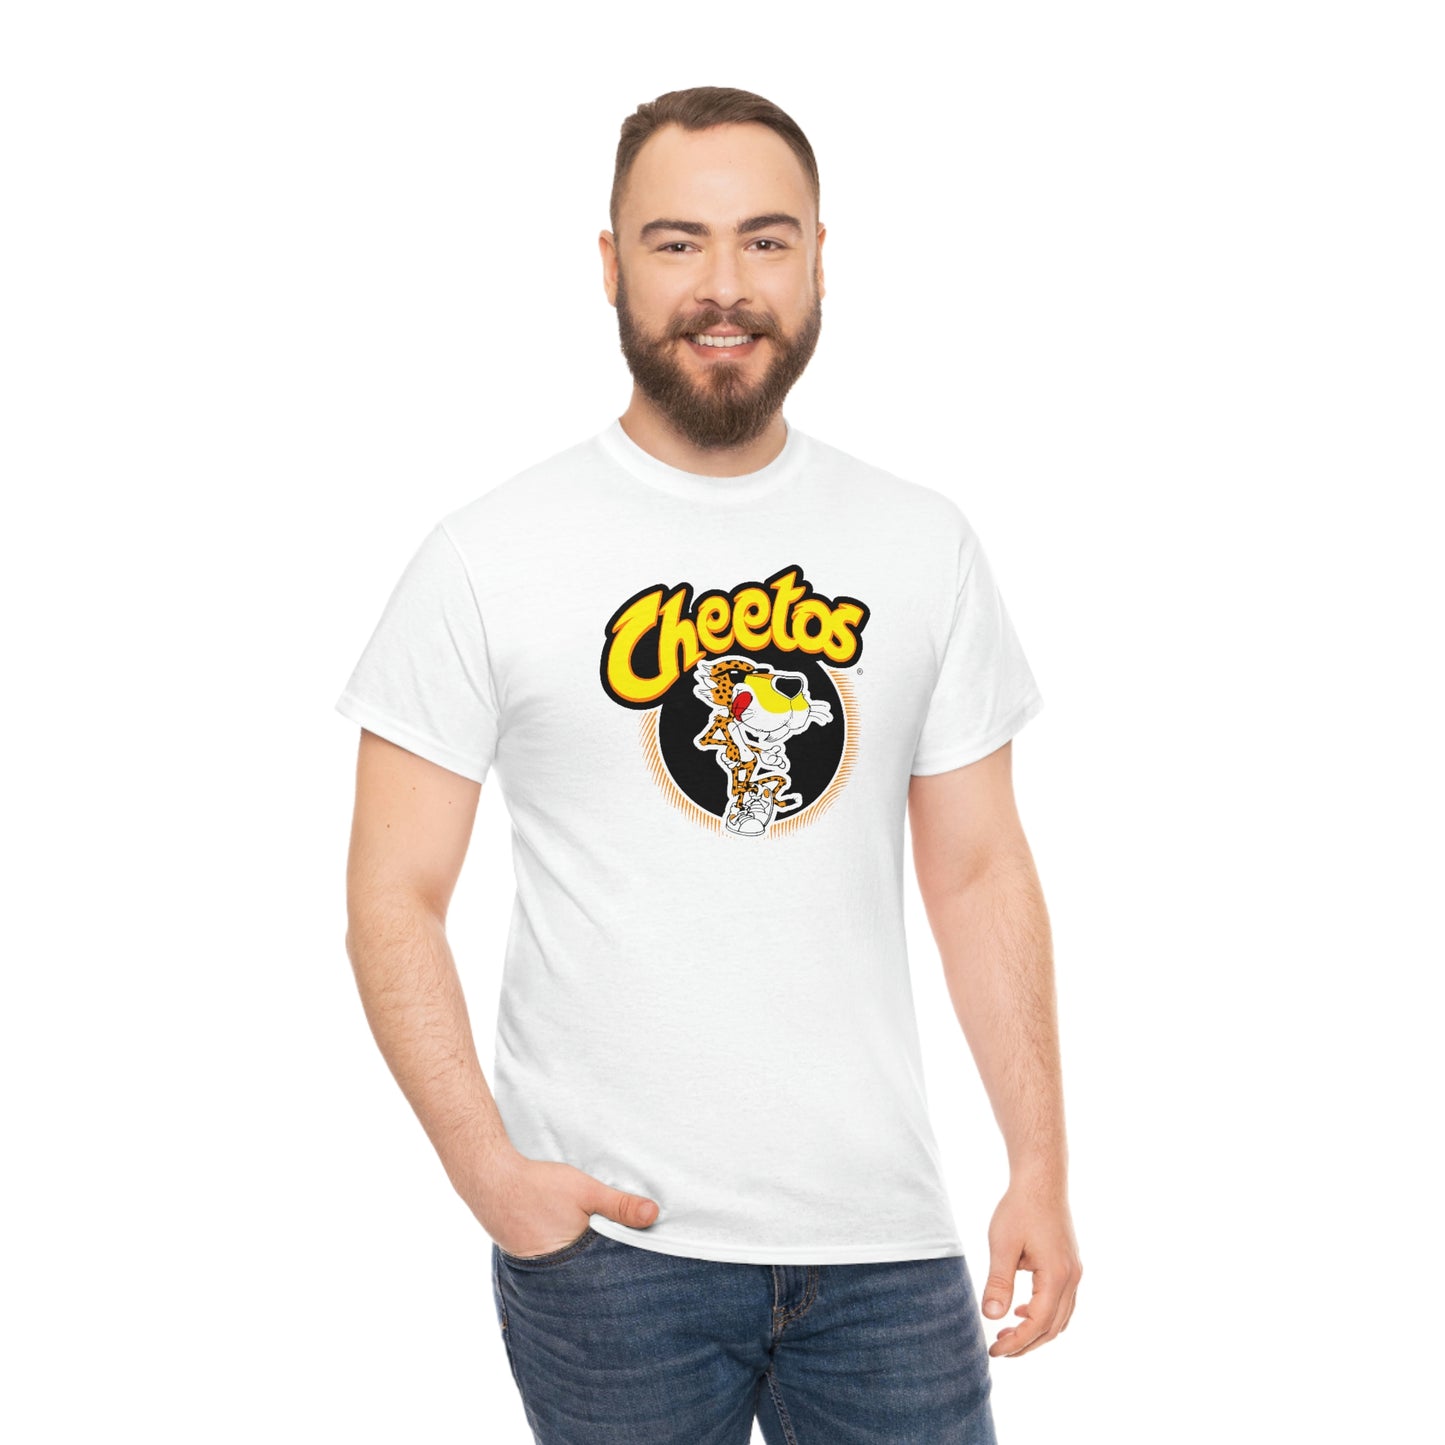 Chester Cheeta T-Shirt